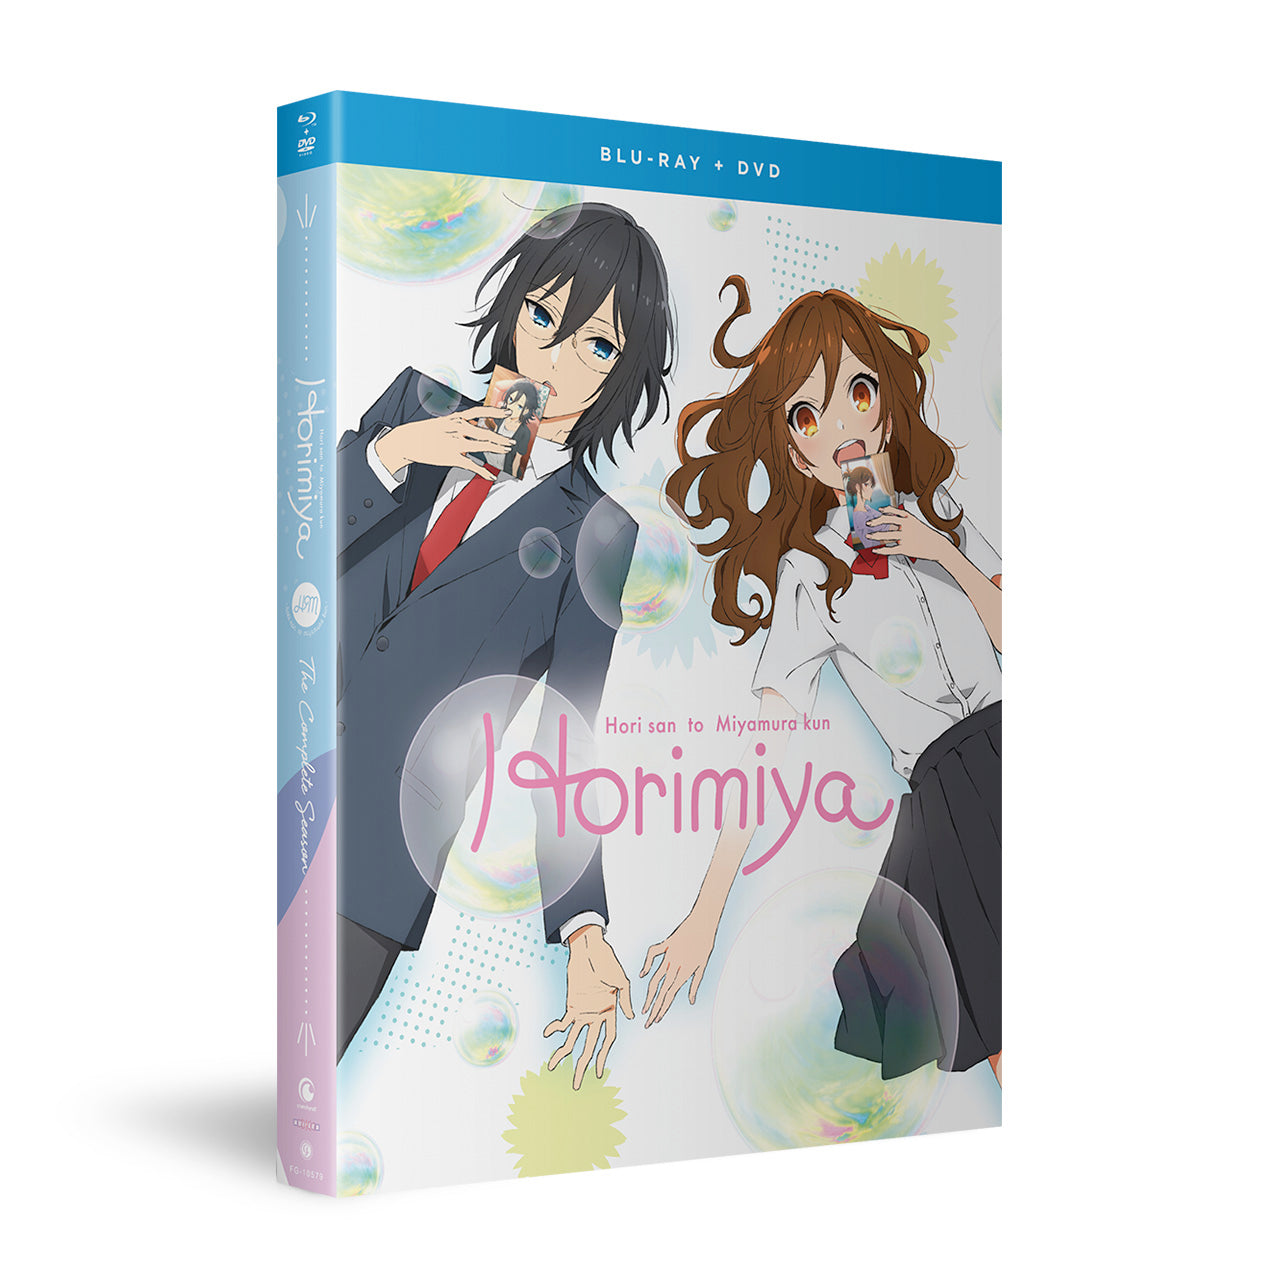 Horimiya - The Complete Season - BD/DVD - LE image count 11